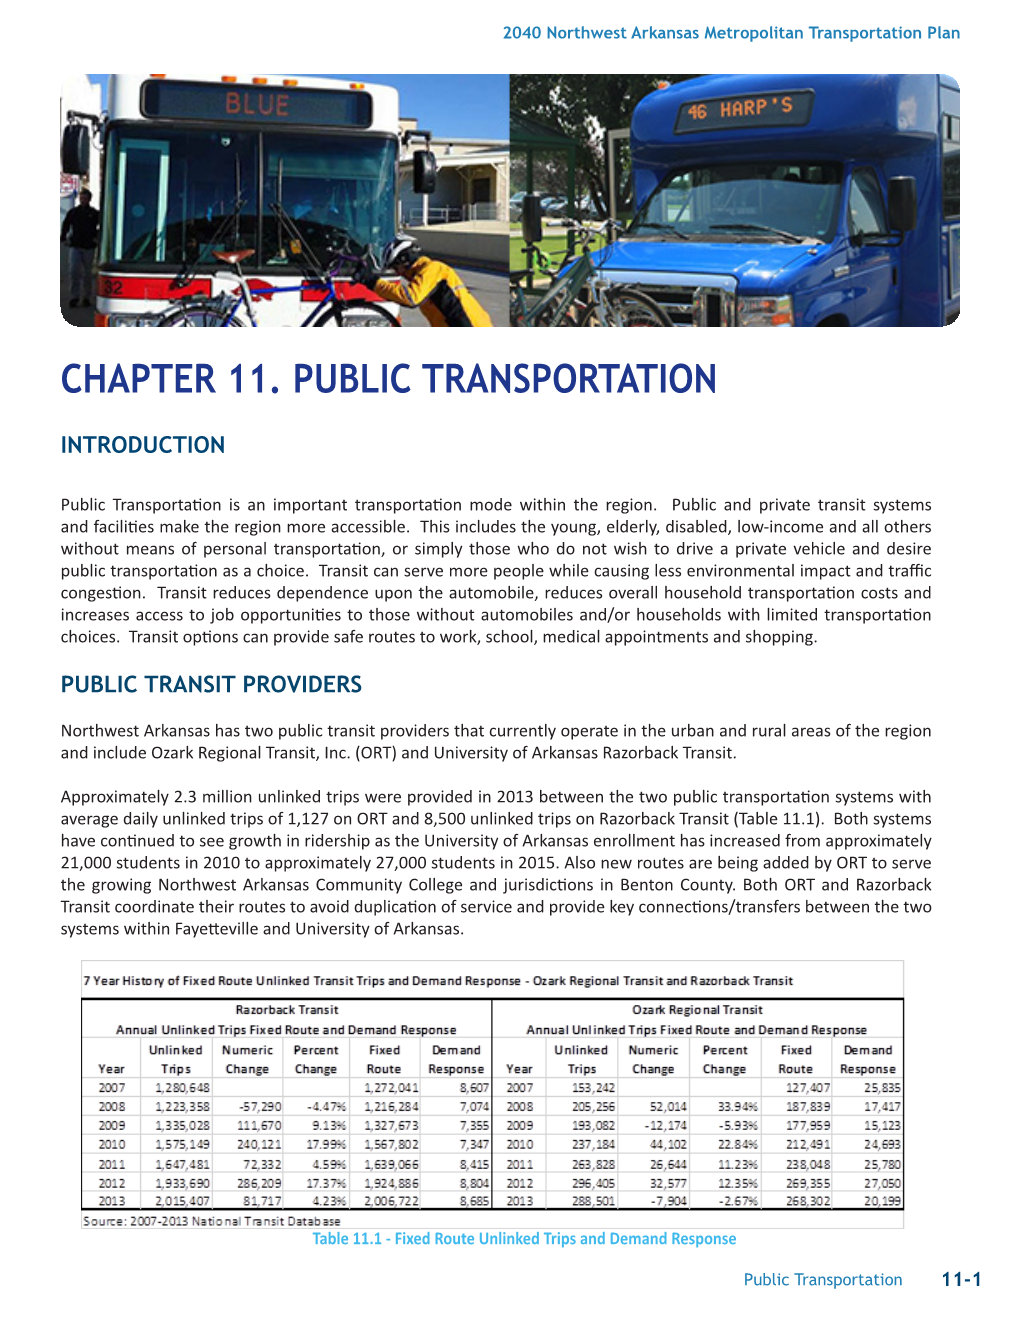 Chapter 11. Public Transportation